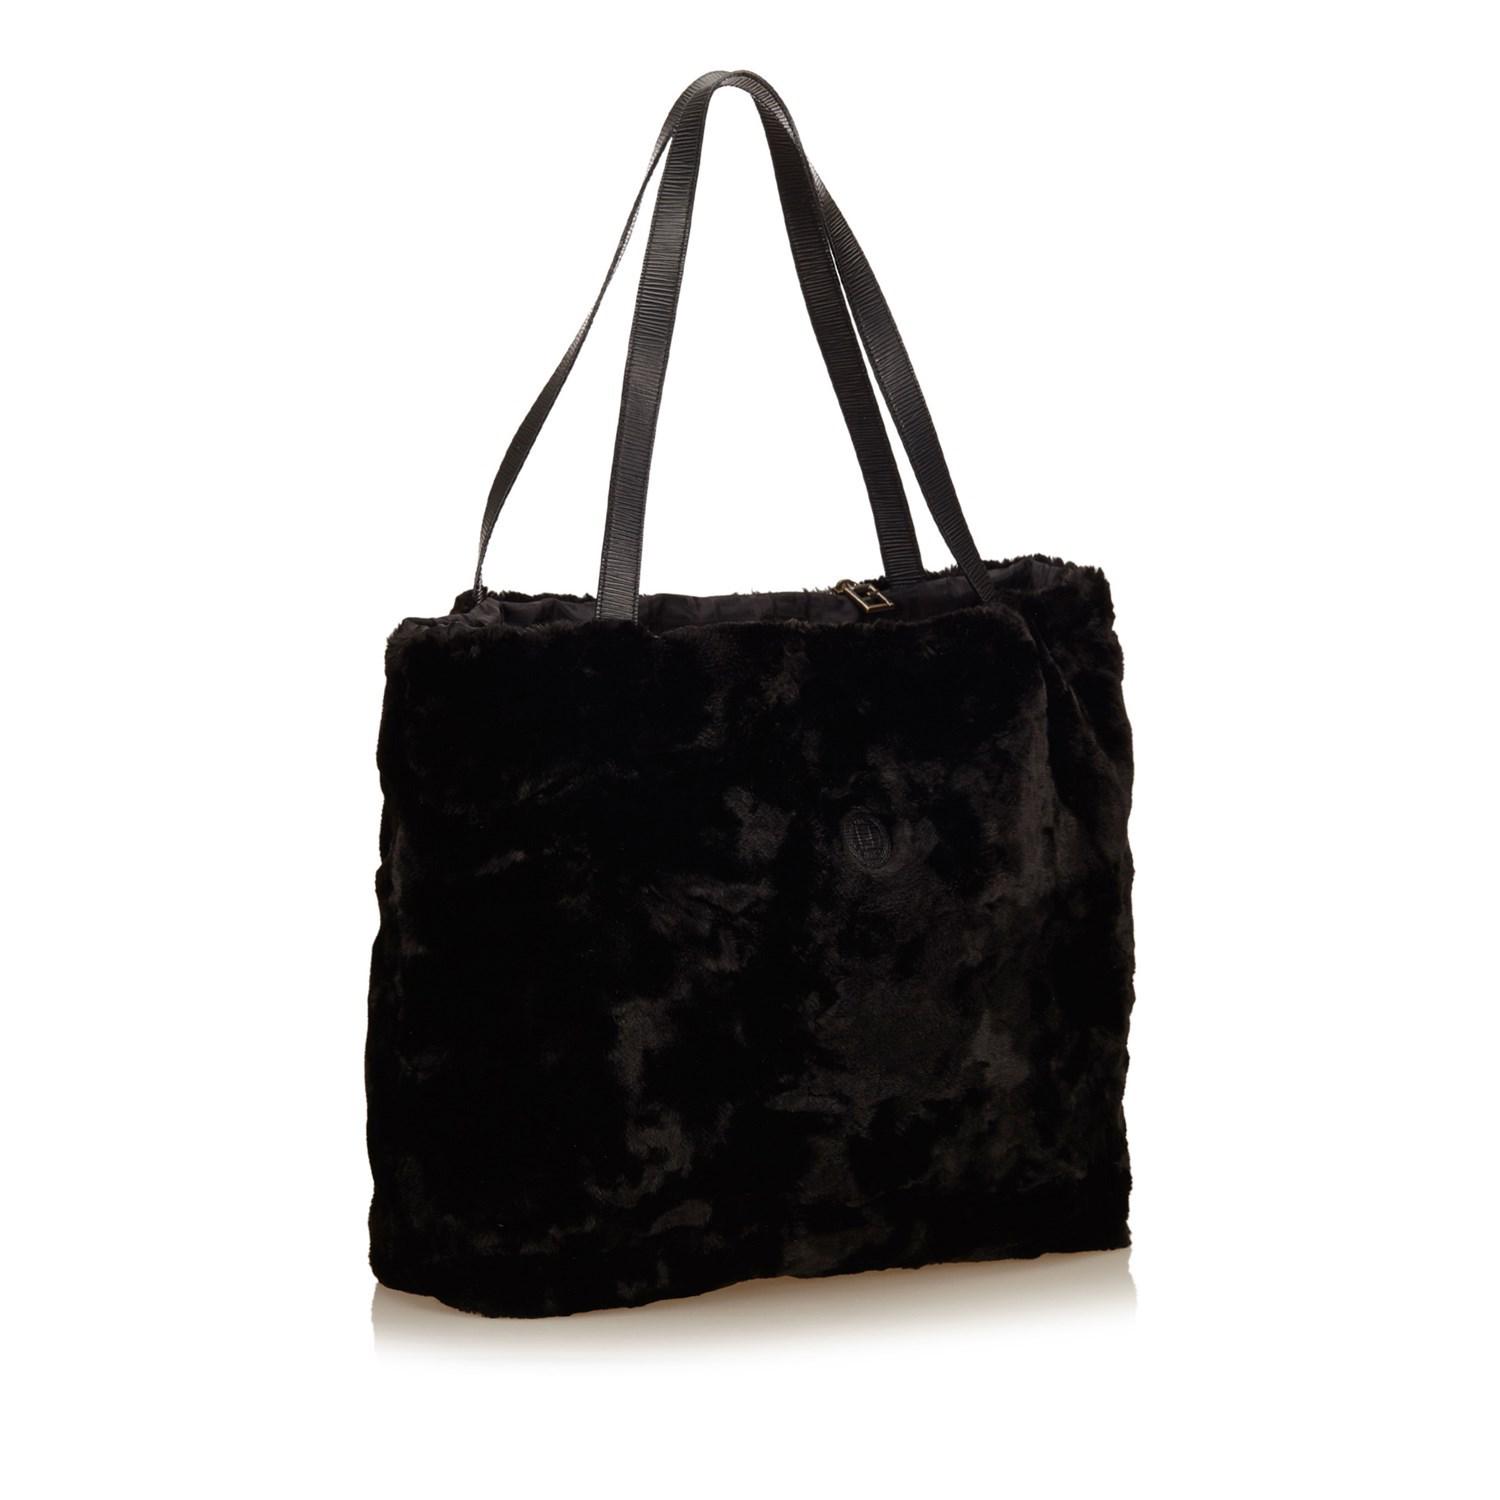 Fendi Fur Tote Bag in Black - Lyst